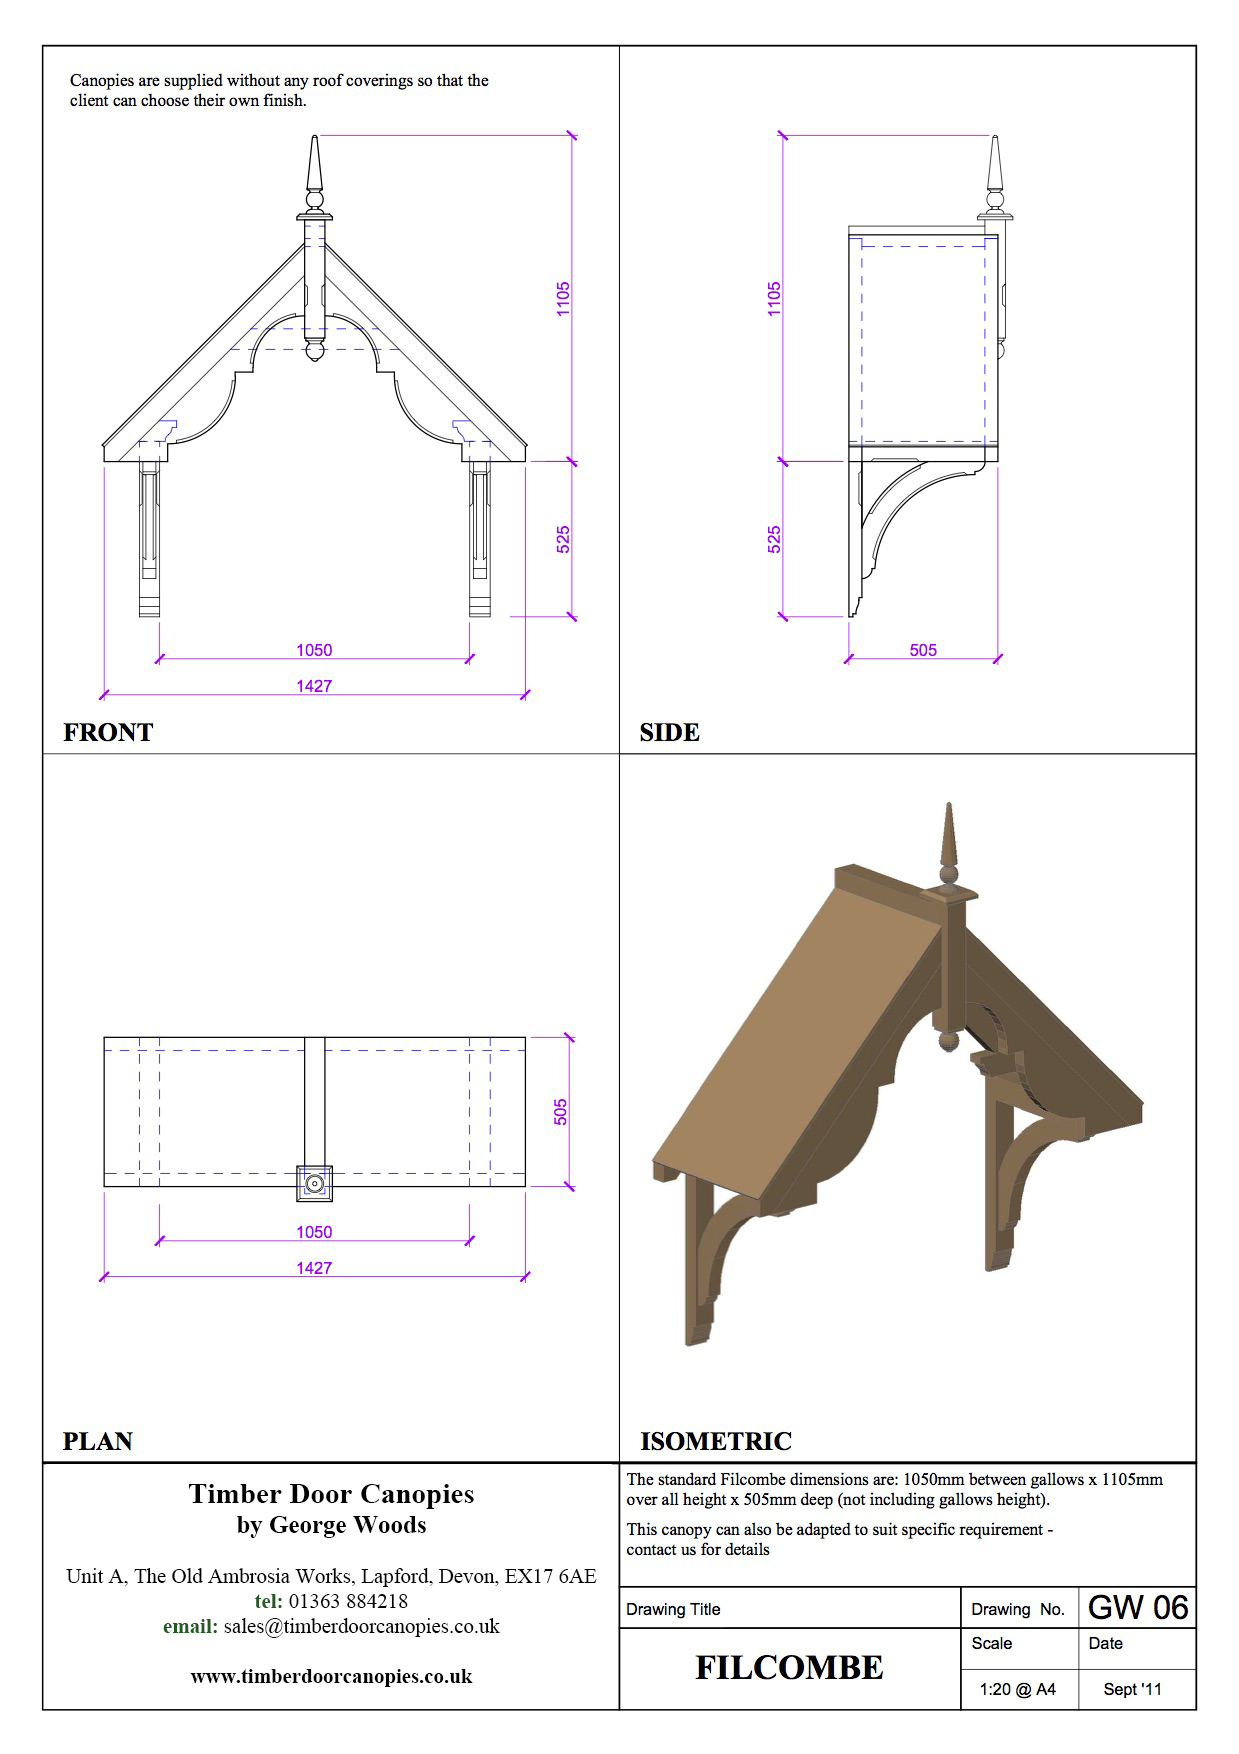 Filcombe canopy CAD drawings